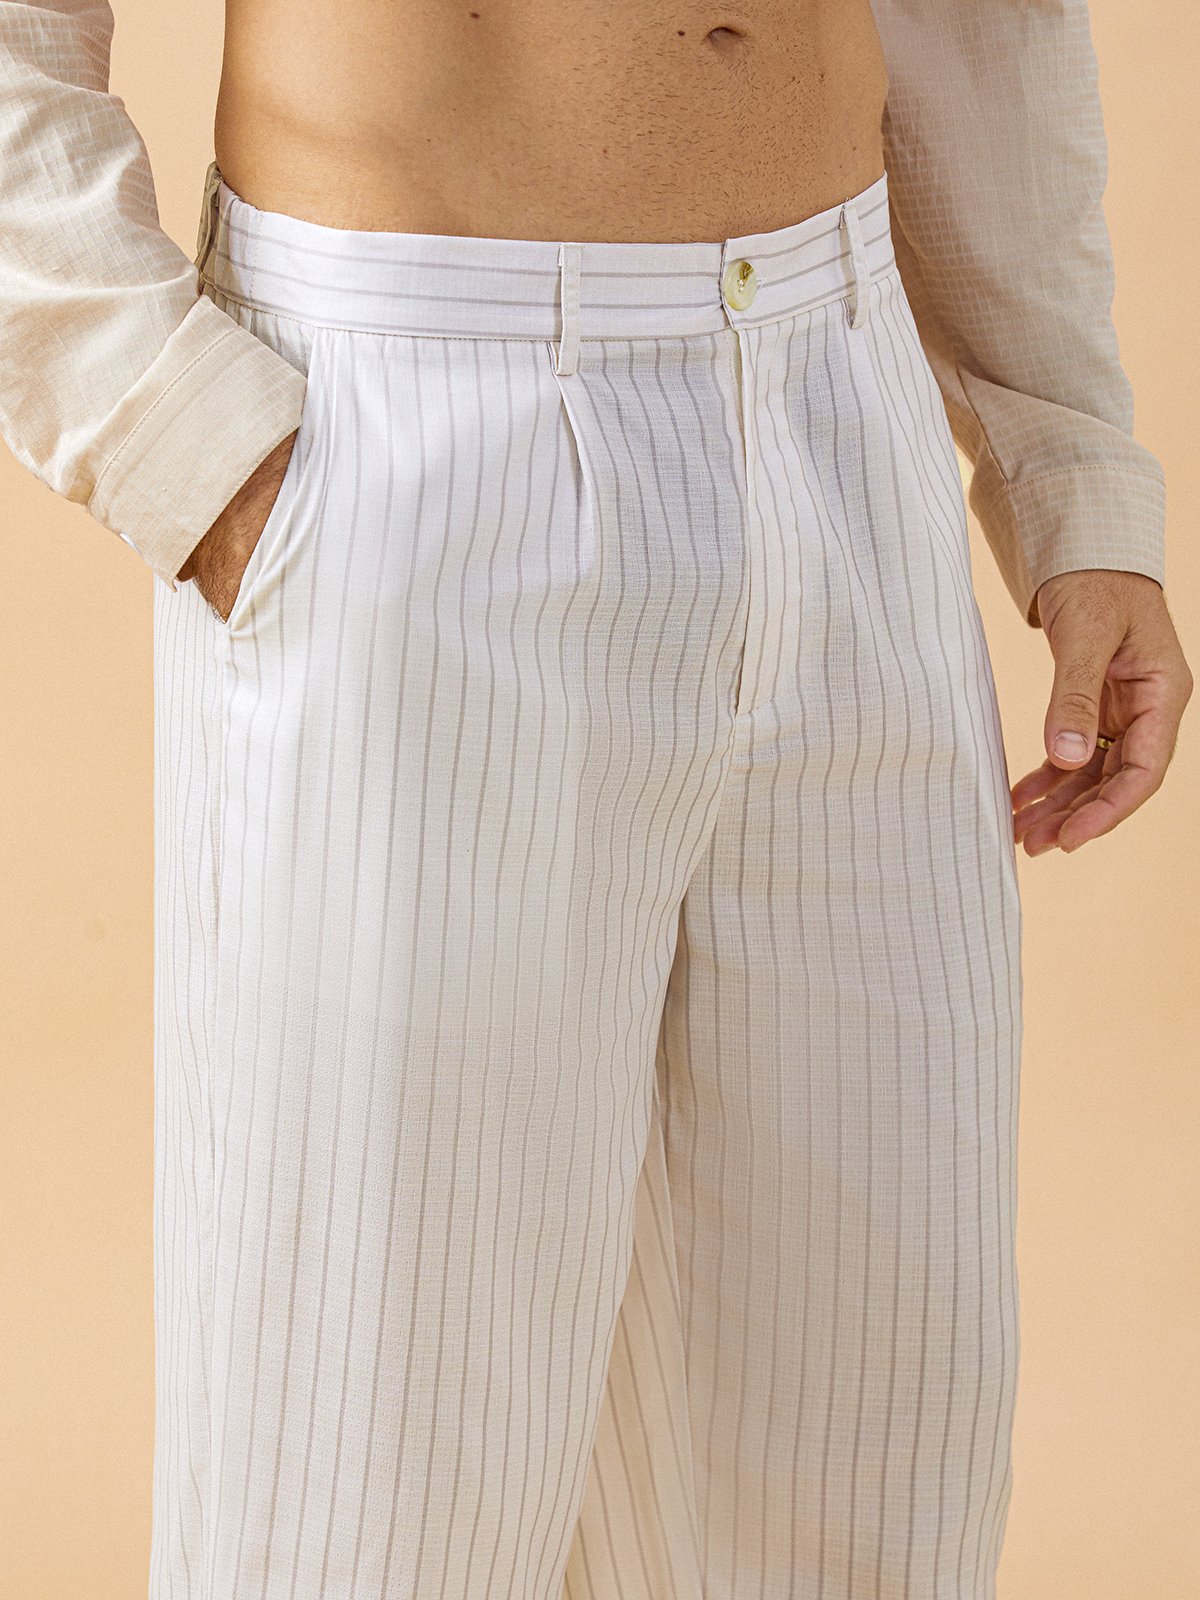 Hardaddy Striped Print Chino Pants